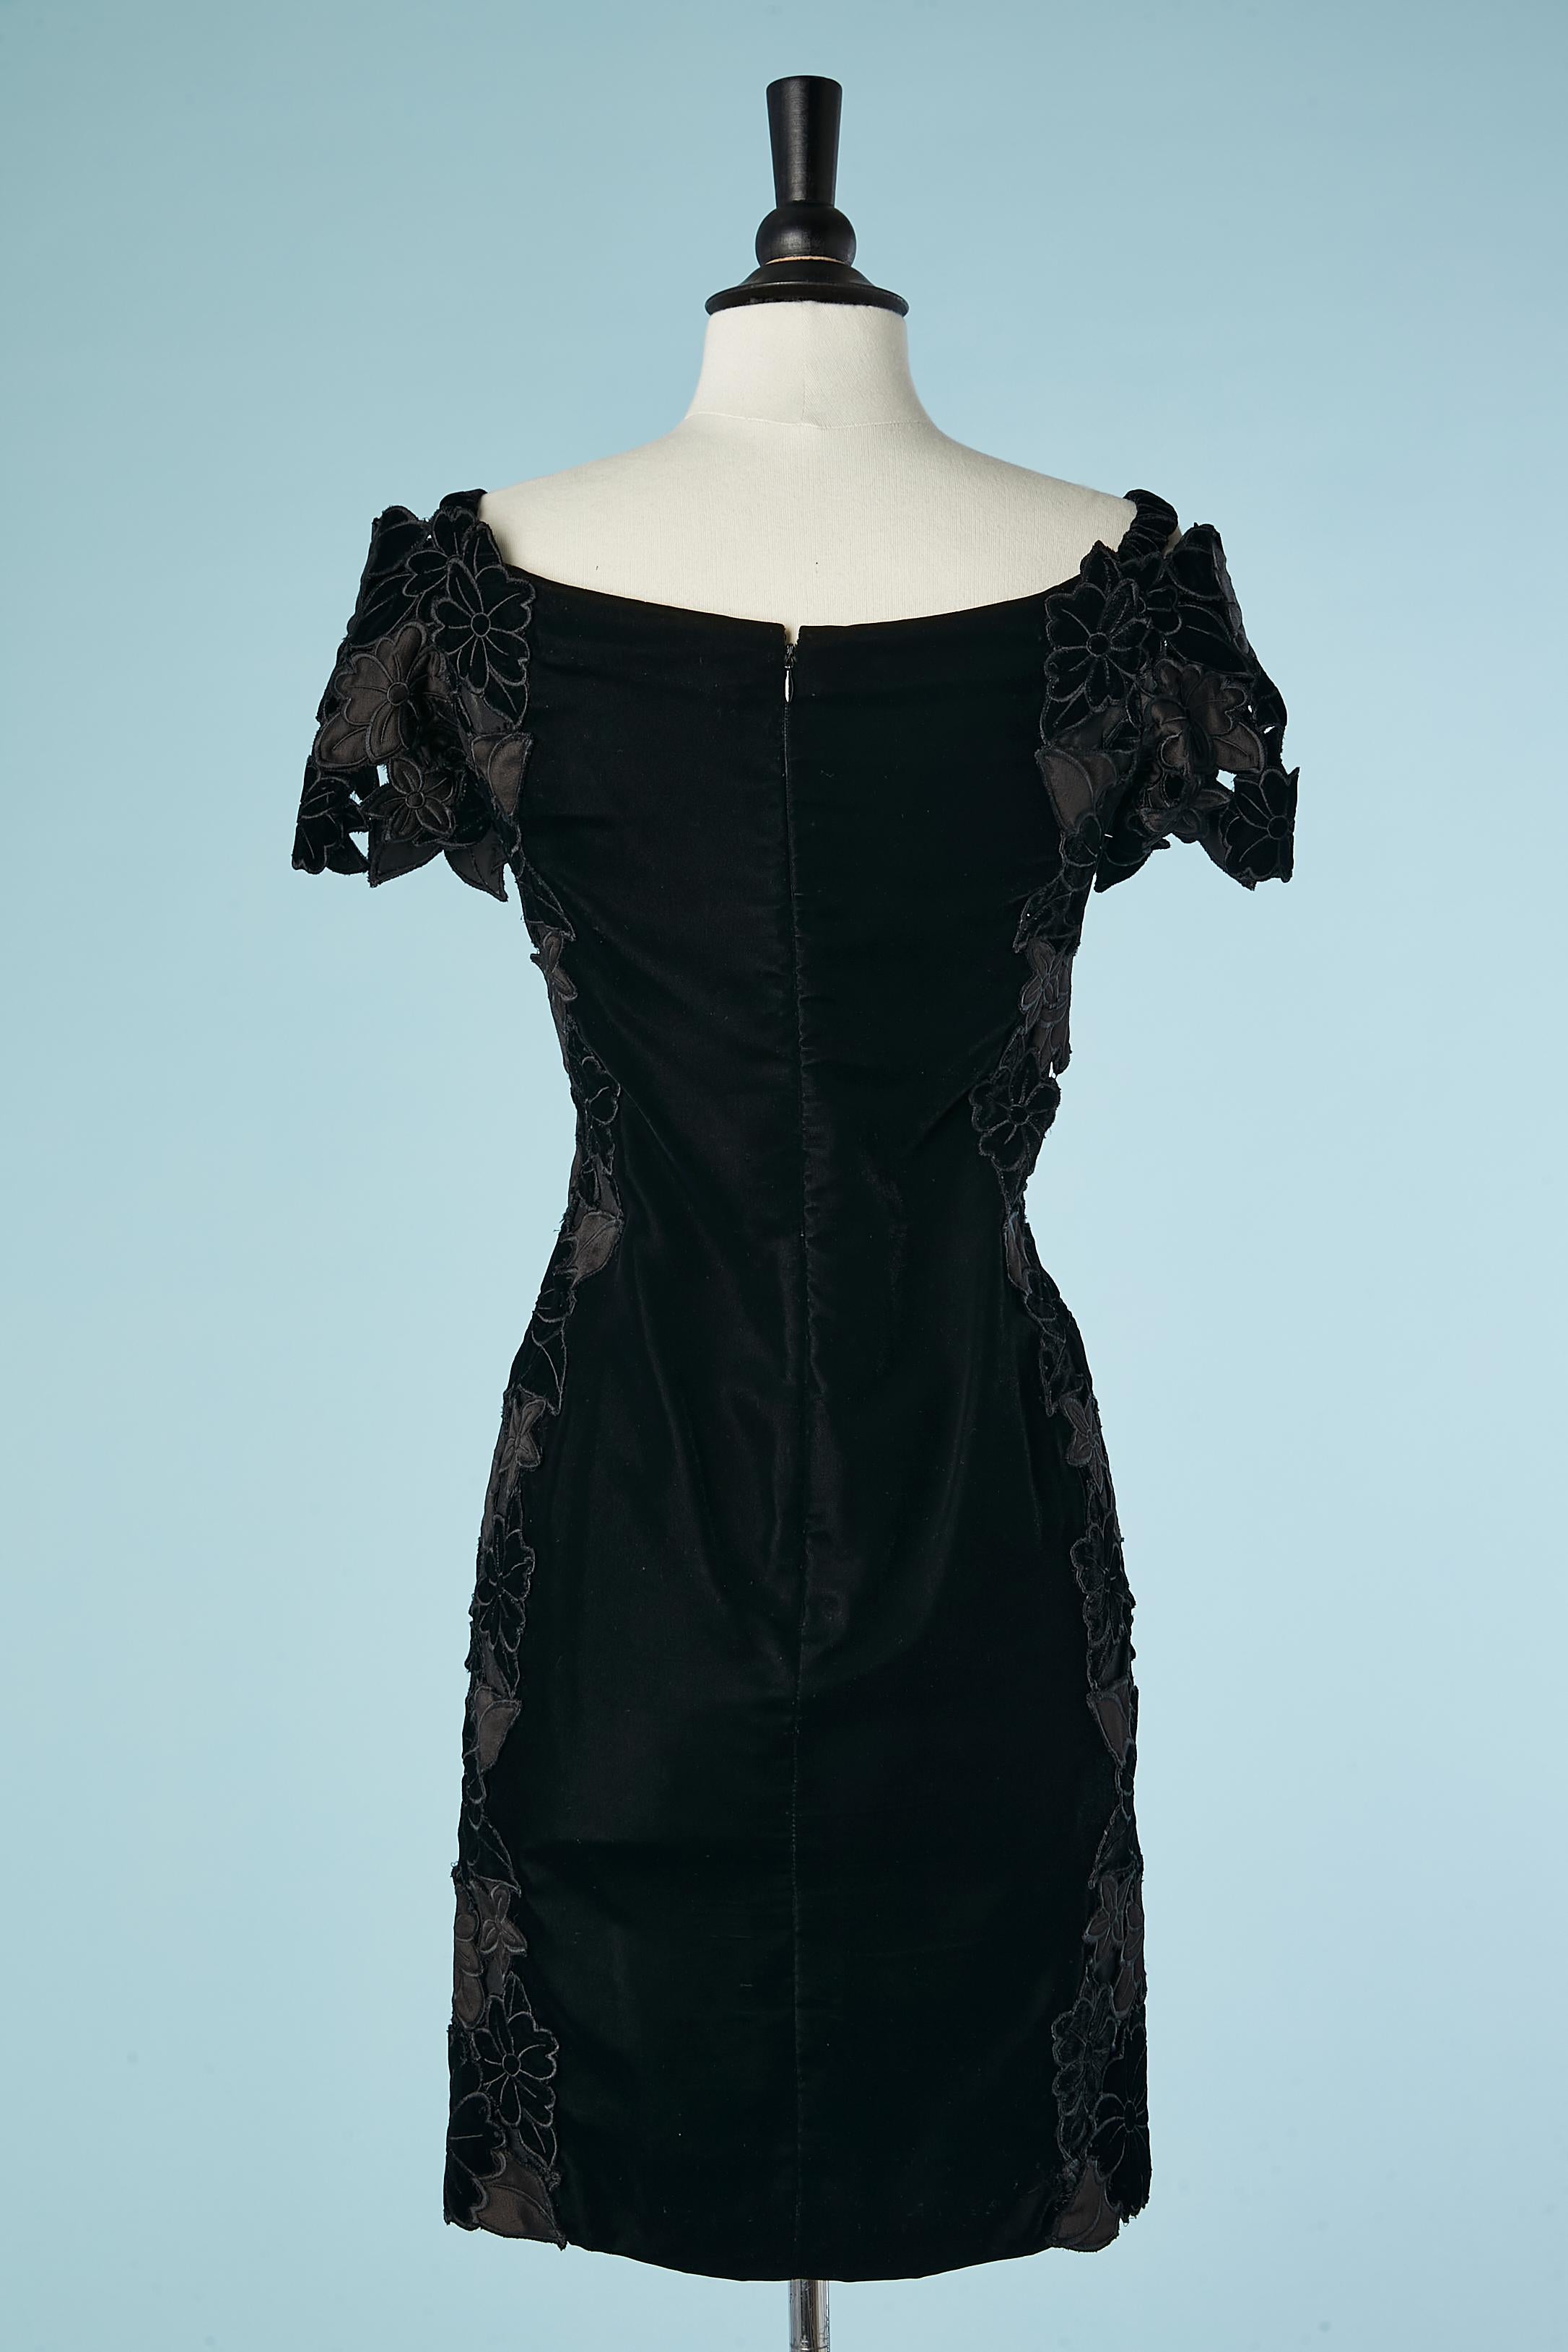 Black velvet cocktail dress with flowers appliqué on both side Loris Azzaro  For Sale 1